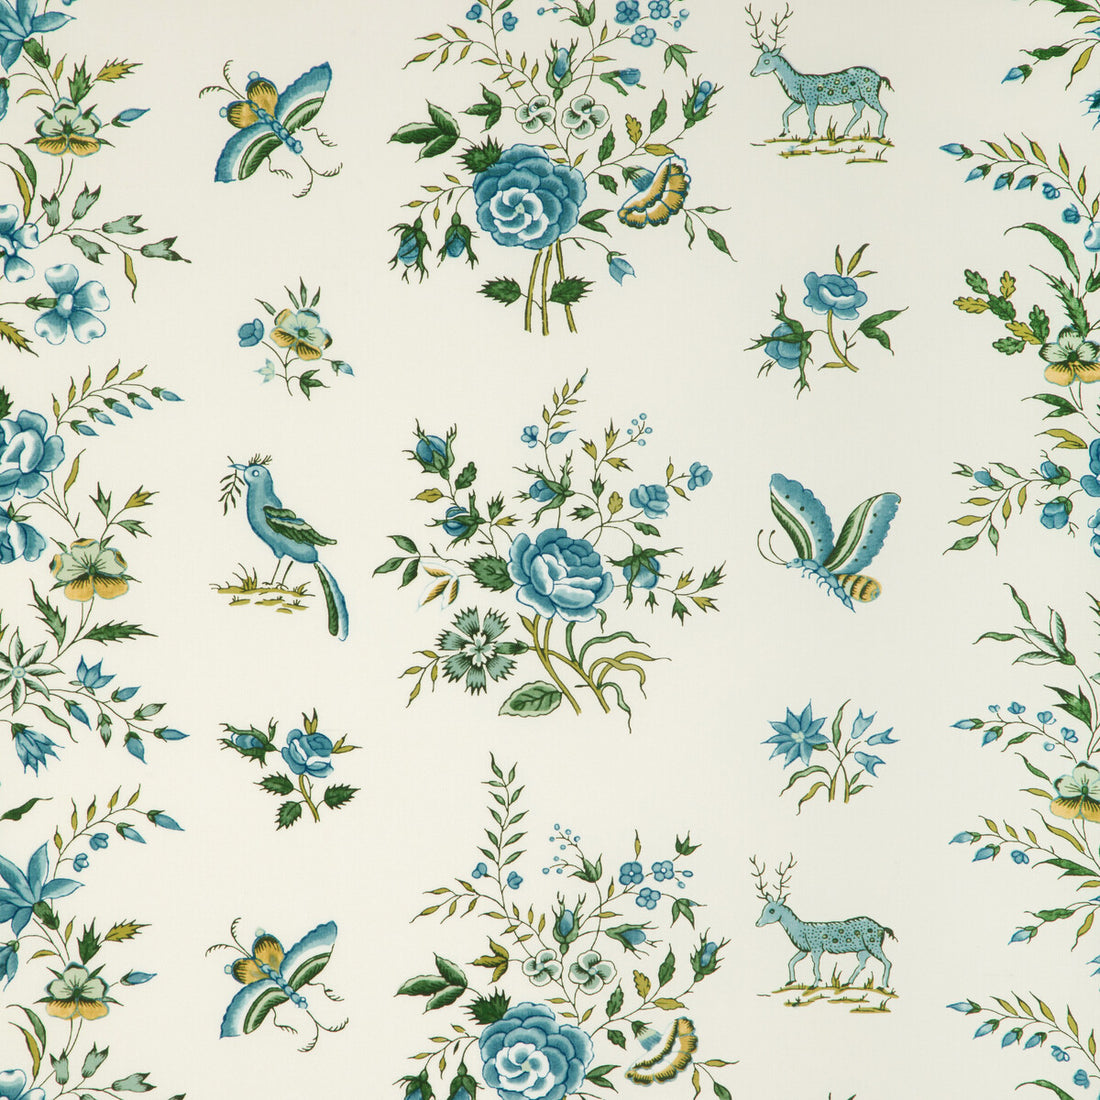 Aurel Print fabric in aqua/leaf color - pattern 8023103.194.0 - by Brunschwig &amp; Fils in the Cadenet collection